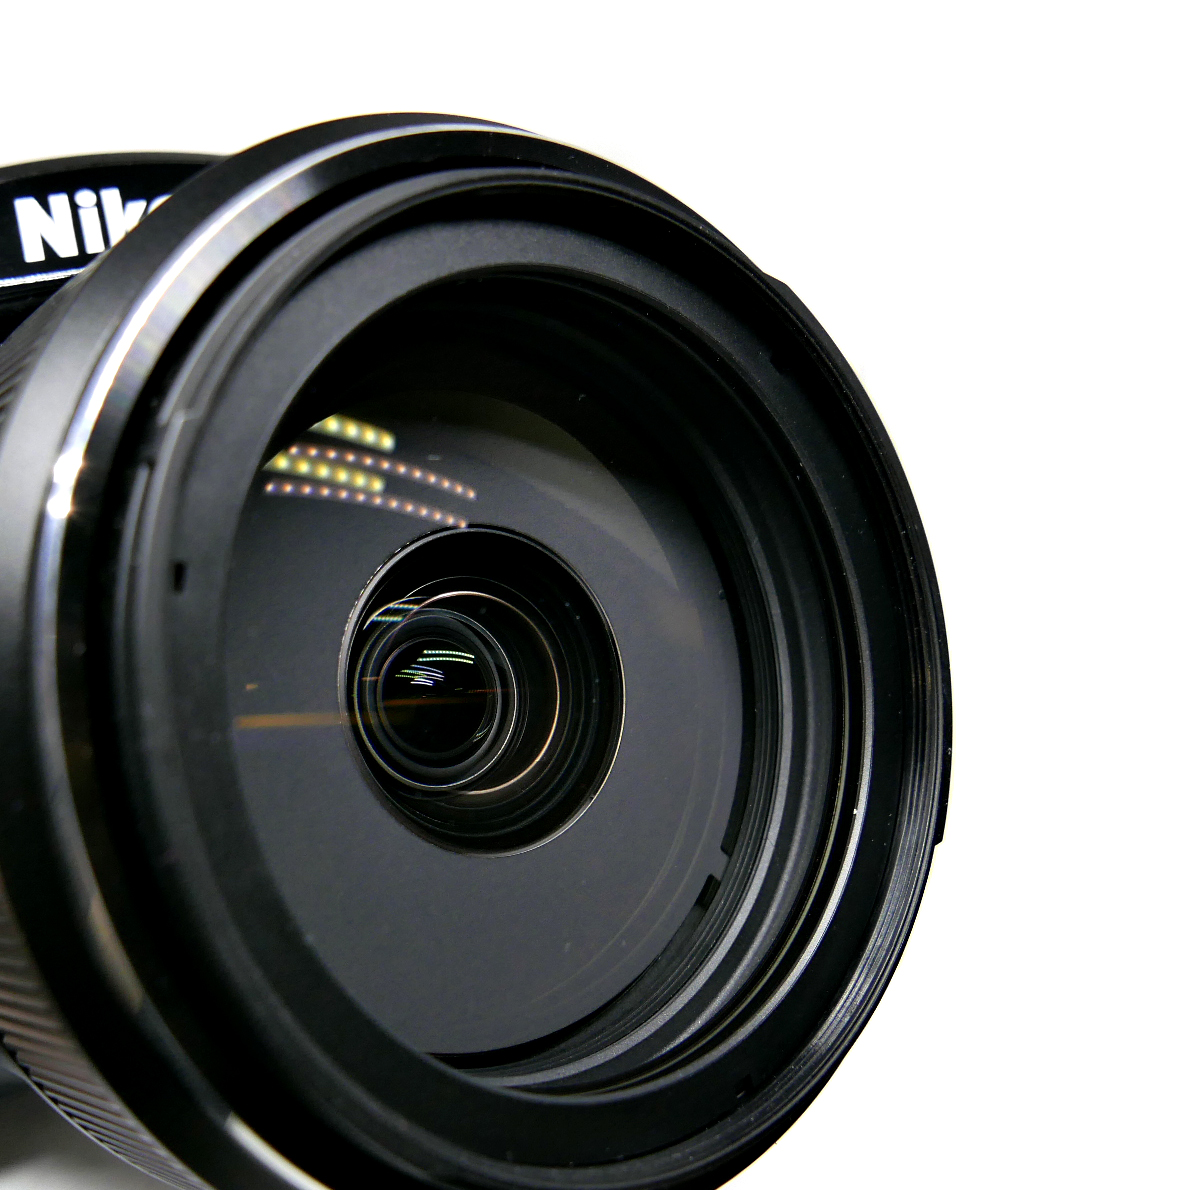 (Myyty) Nikon Coolpix P1000 (käytetty) (takuu)